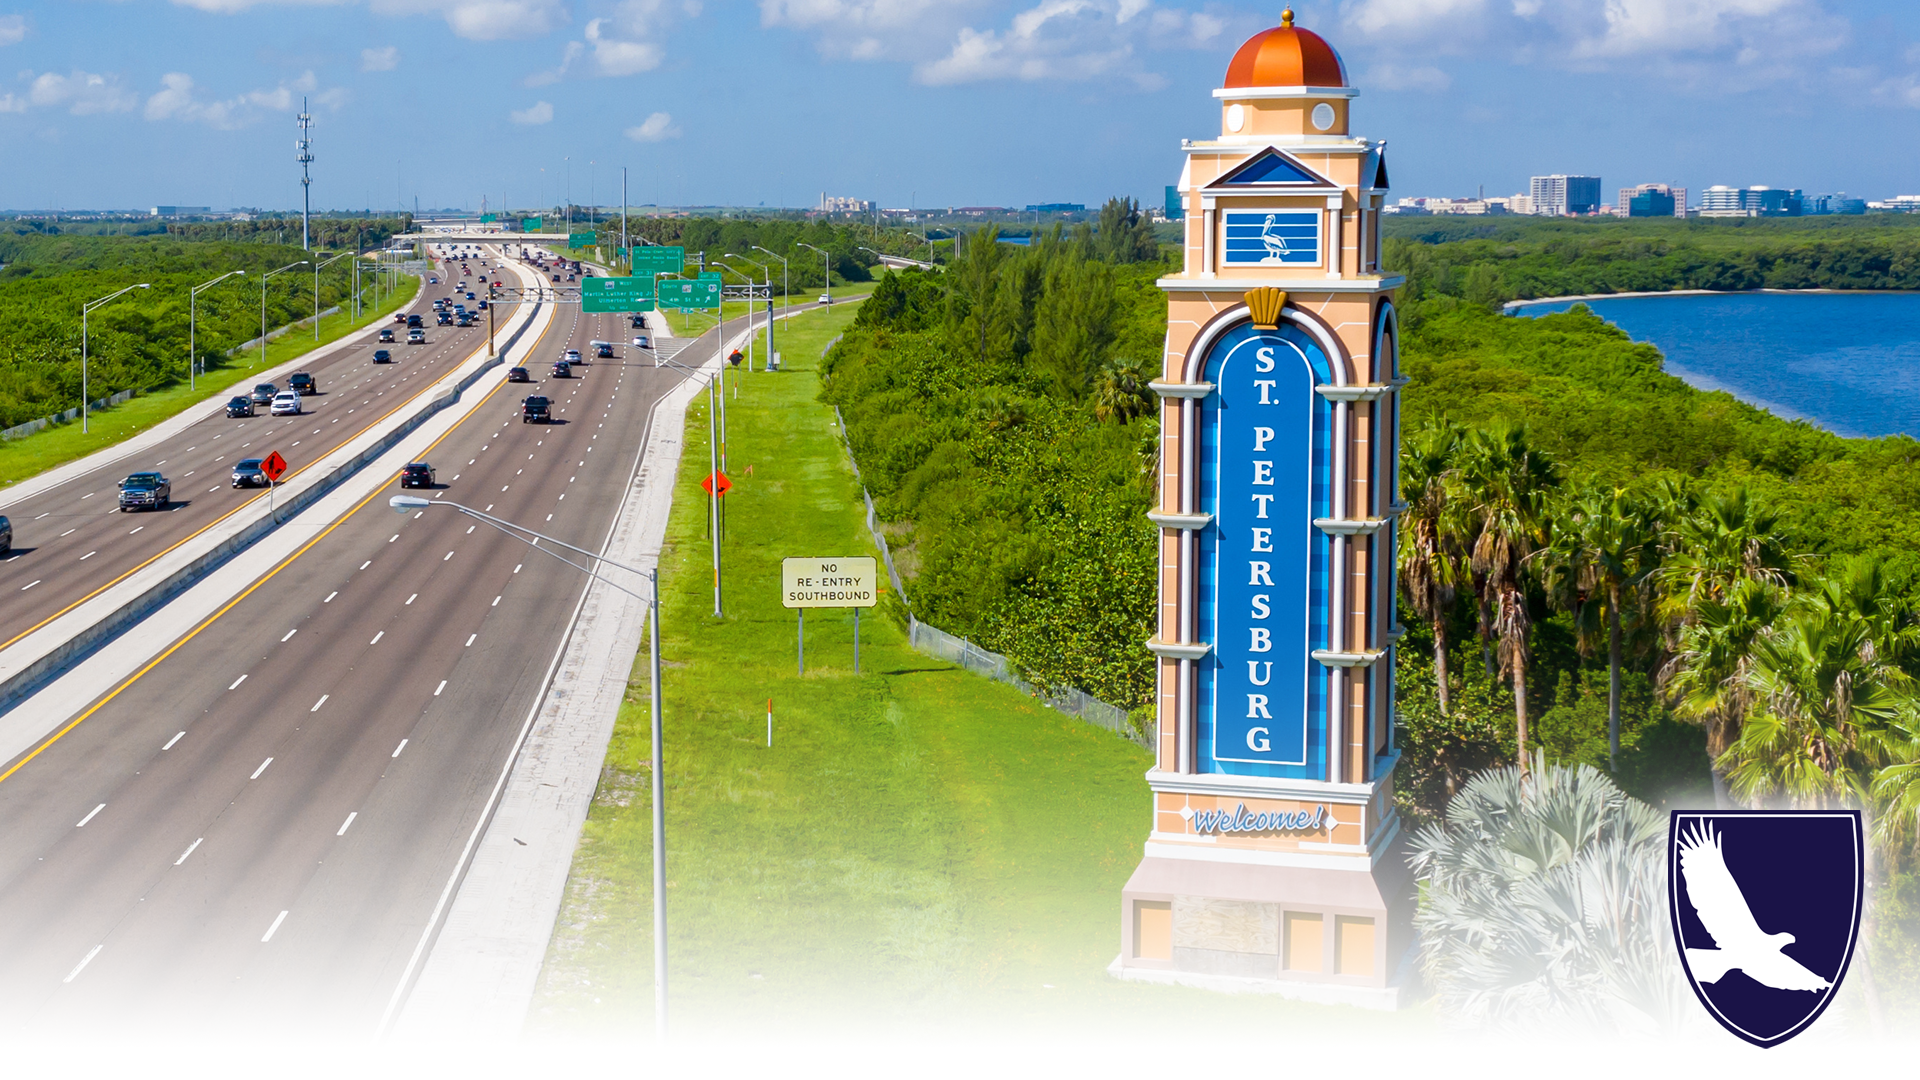 Saint Petersburg Florida Highway with welcome to St. Petersburg sign